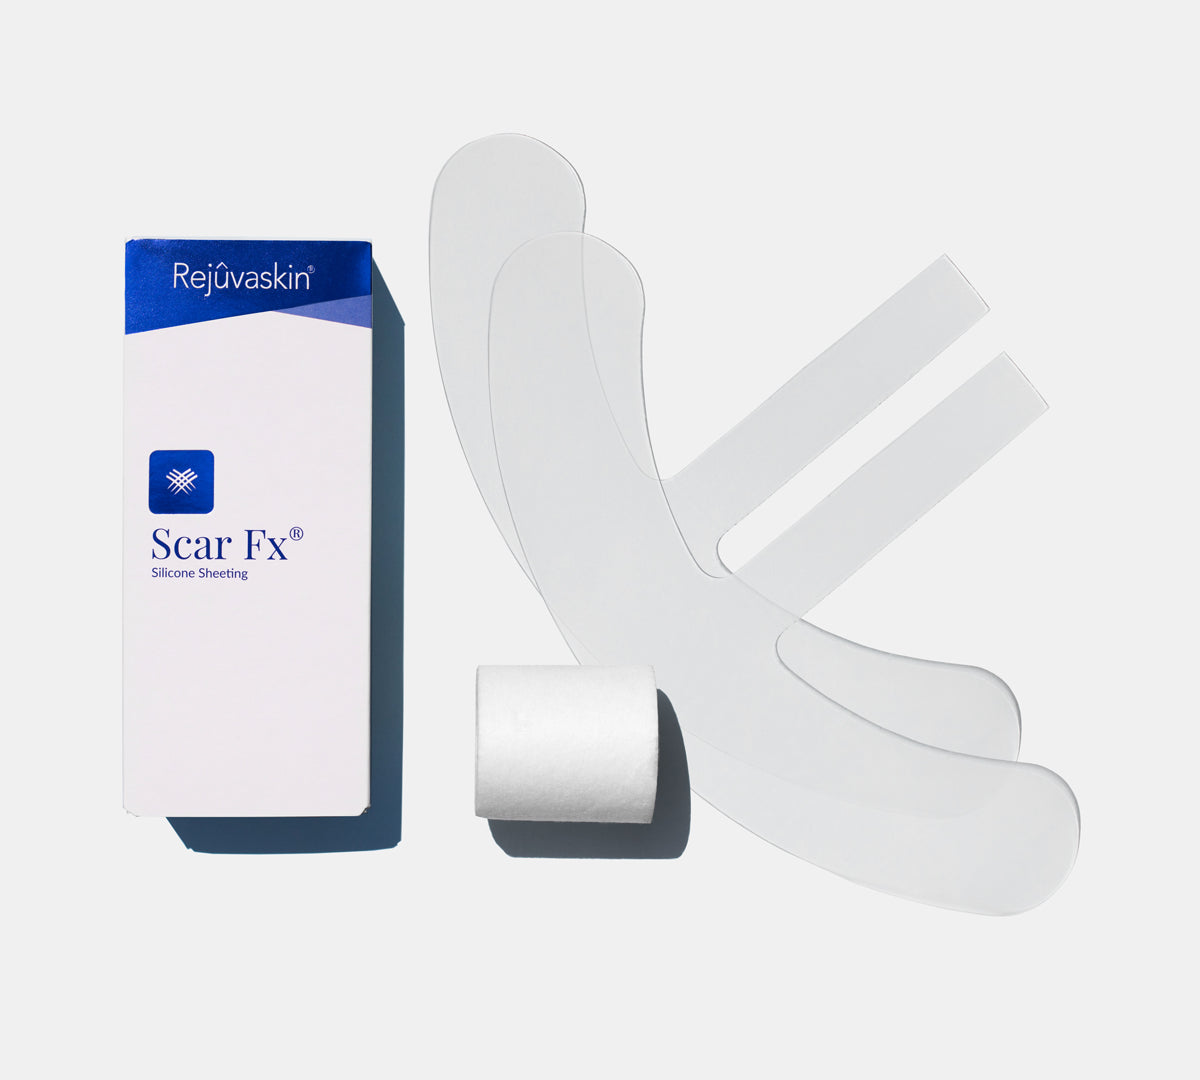 Scar Fx Silicone Sheet for Breast Procedures, Rejuvaskin Scar Management